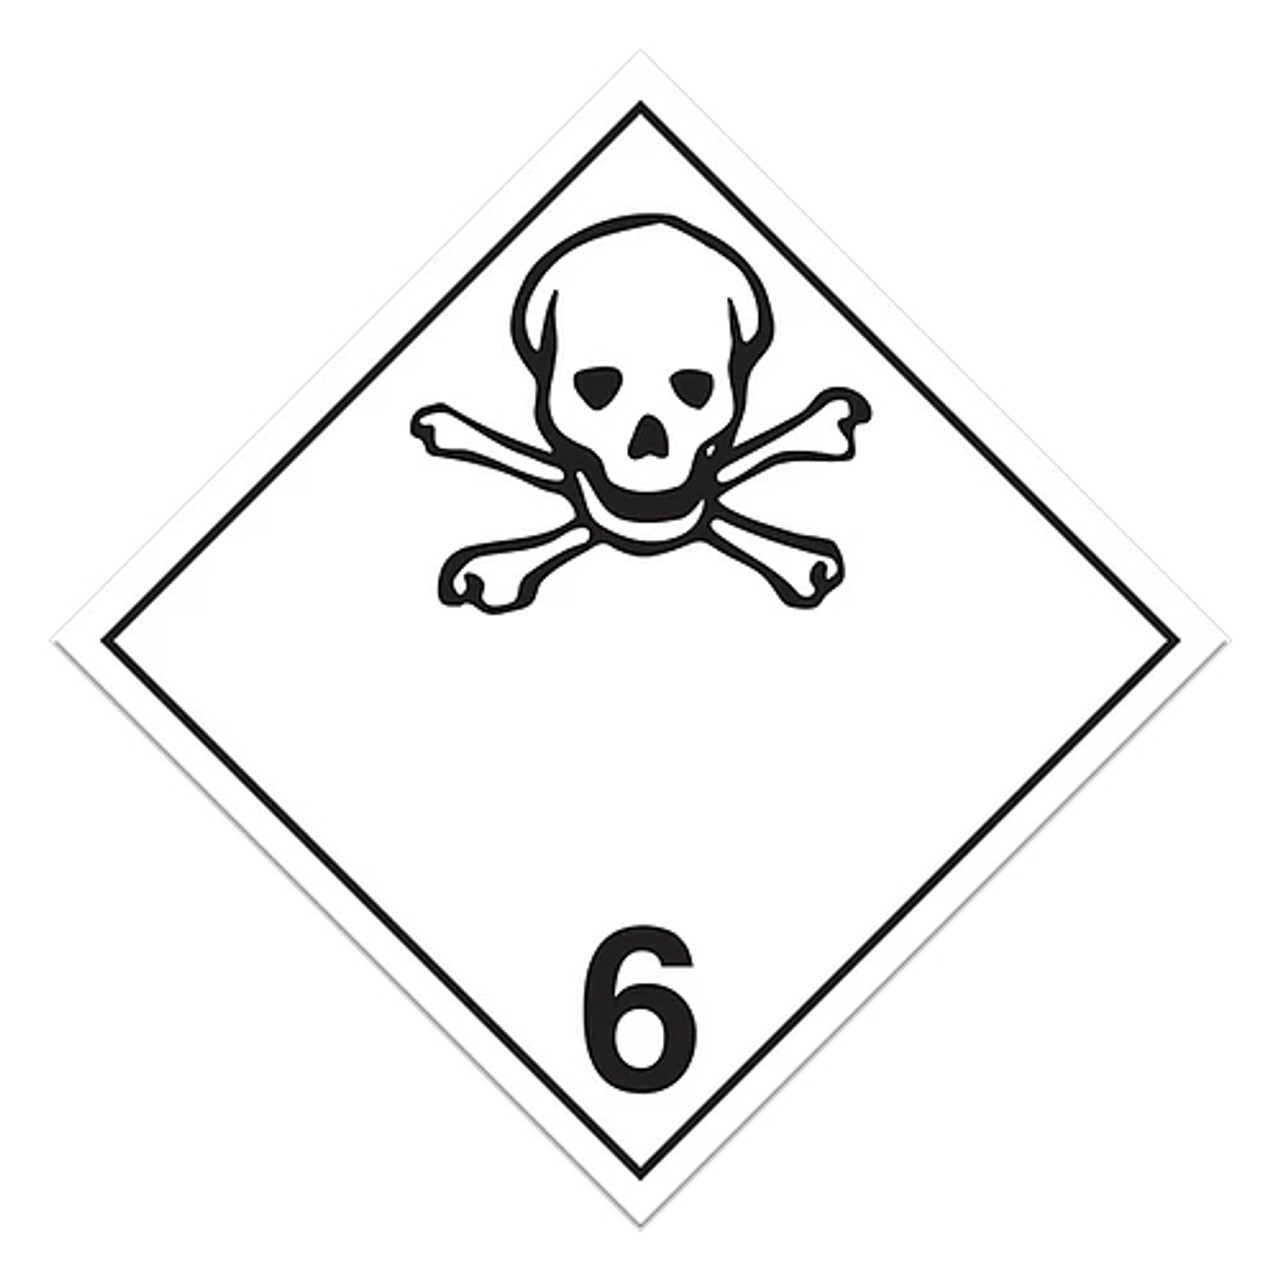 6.1 Toxic Substances Placards 10.5"x10.5"